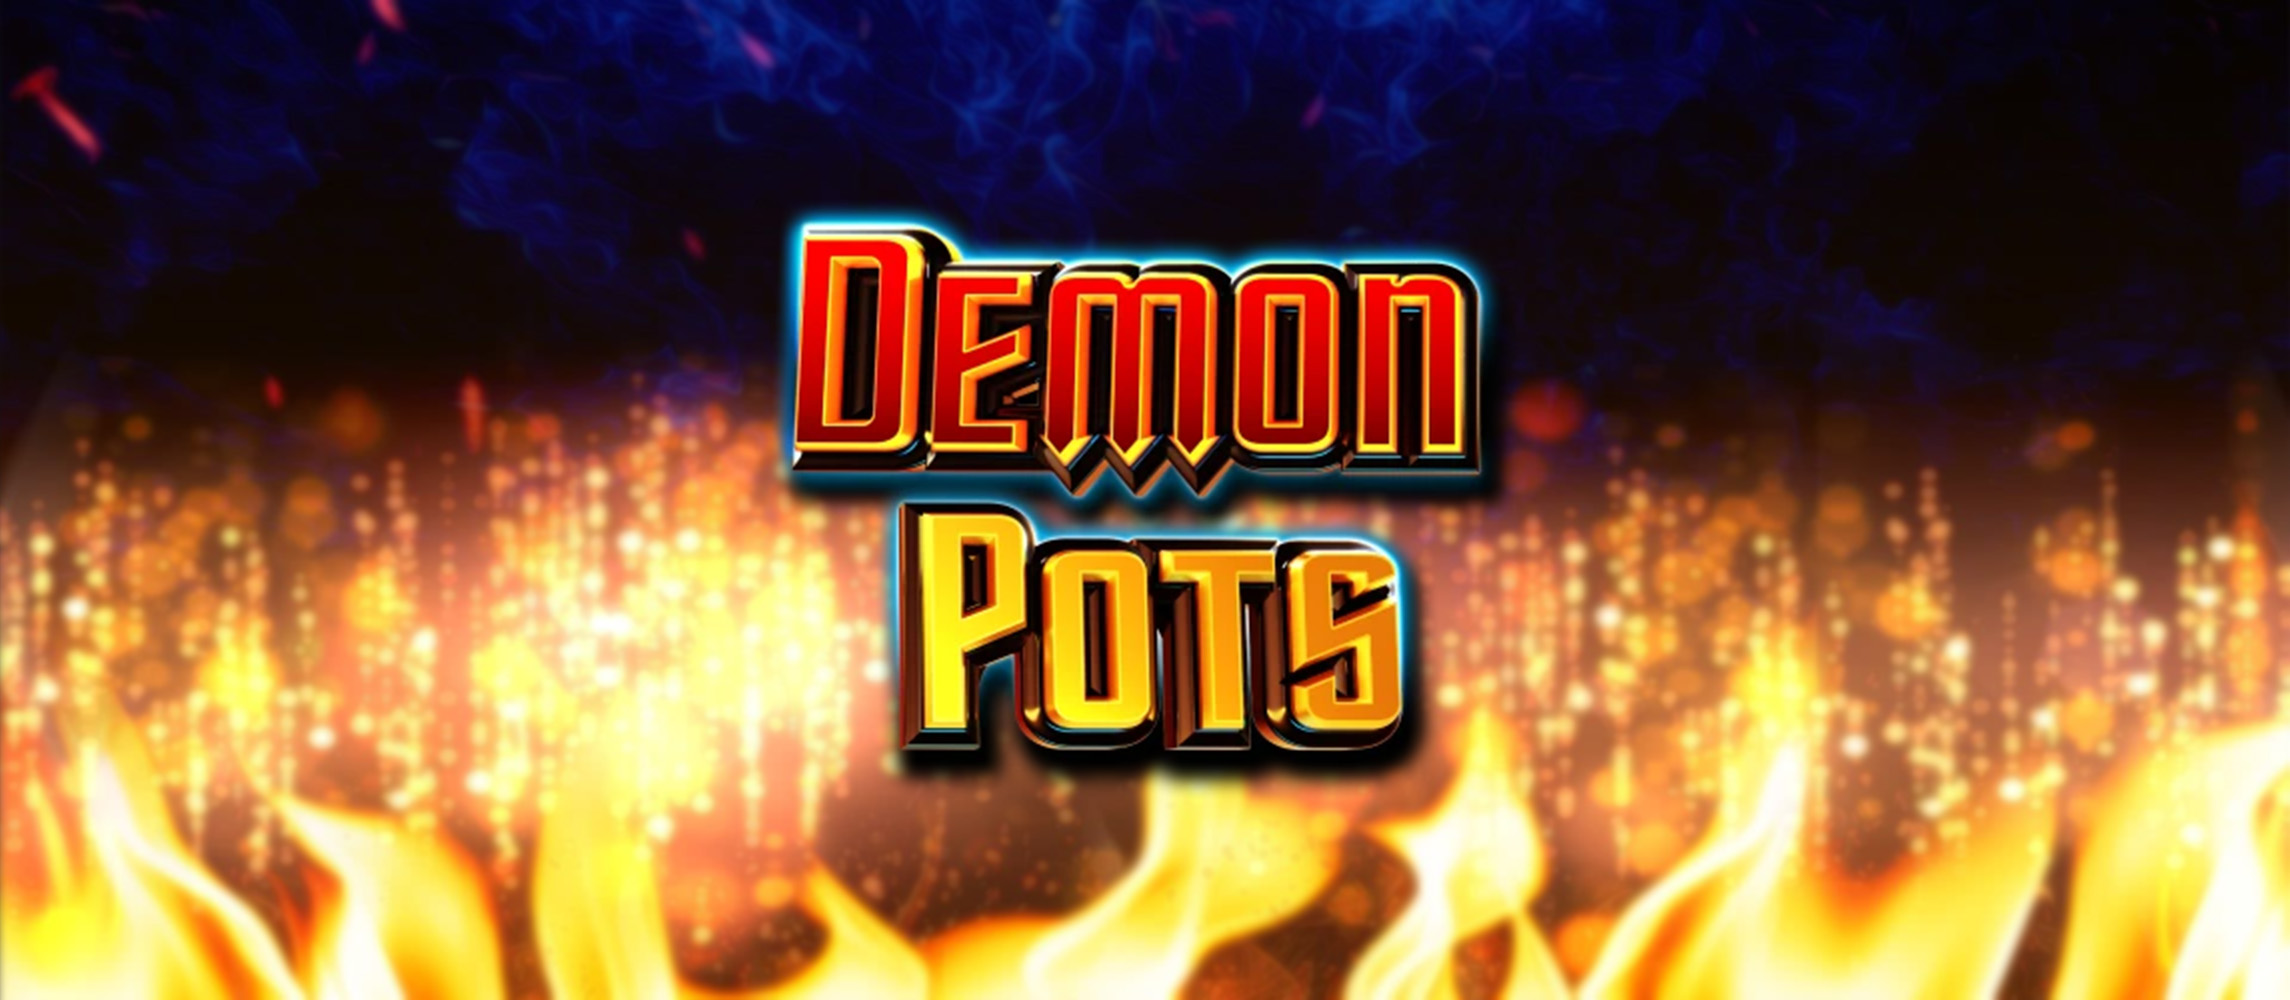 New casino game by Pragmatic Play - Demon Pots